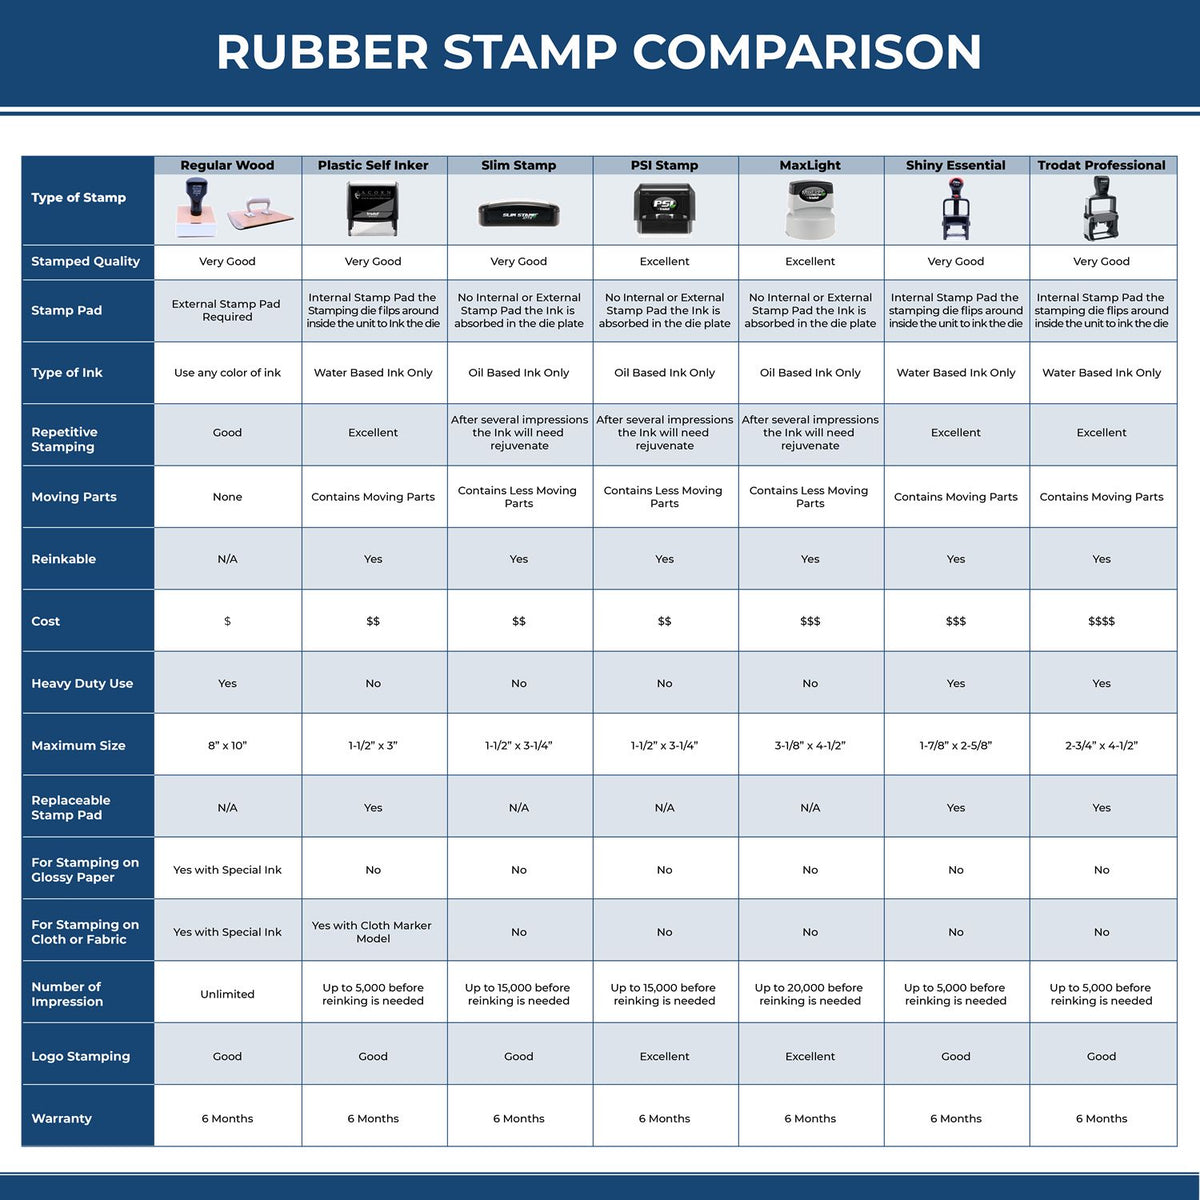 Debtor Exhibit Rubber Stamp 4305R Rubber Stamp Comparison